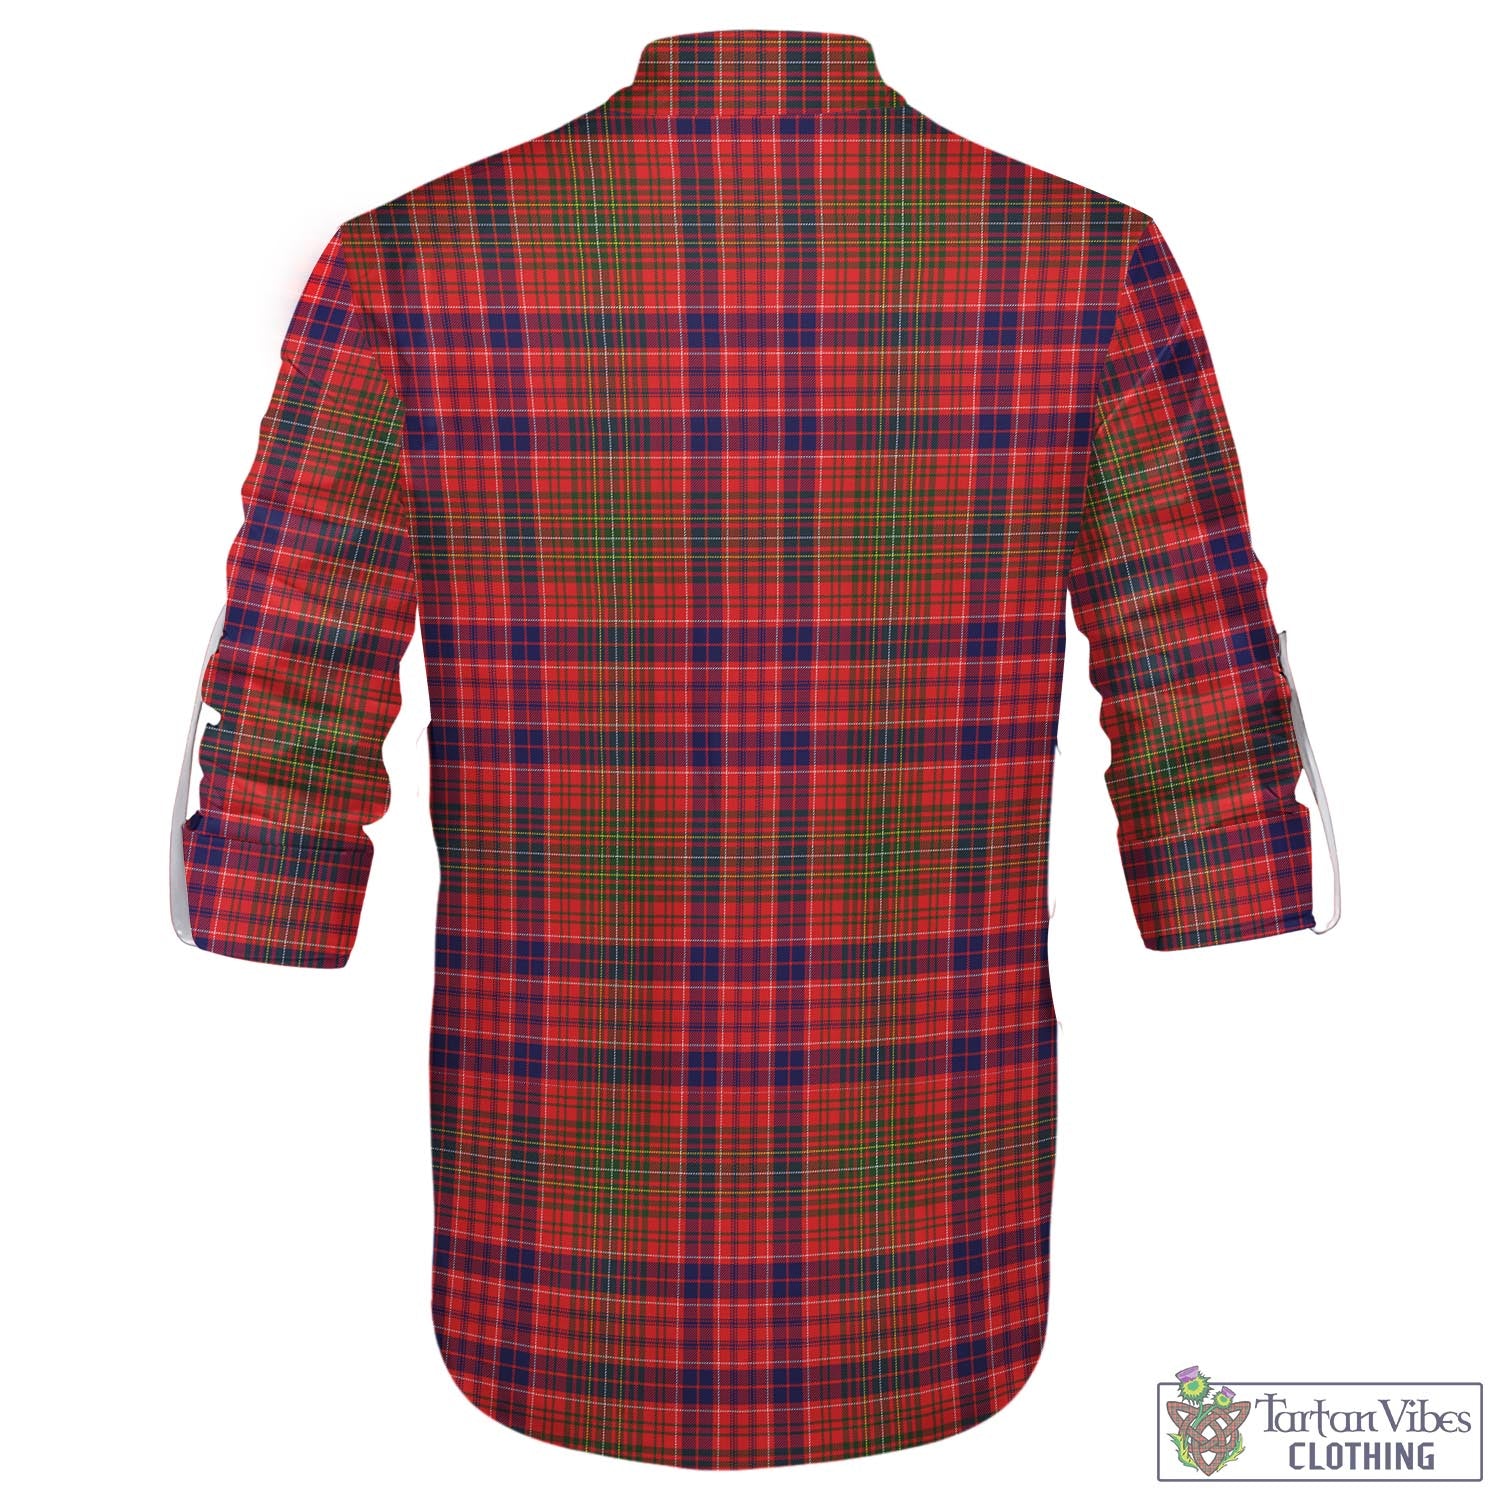 Tartan Vibes Clothing Lumsden Modern Tartan Men's Scottish Traditional Jacobite Ghillie Kilt Shirt